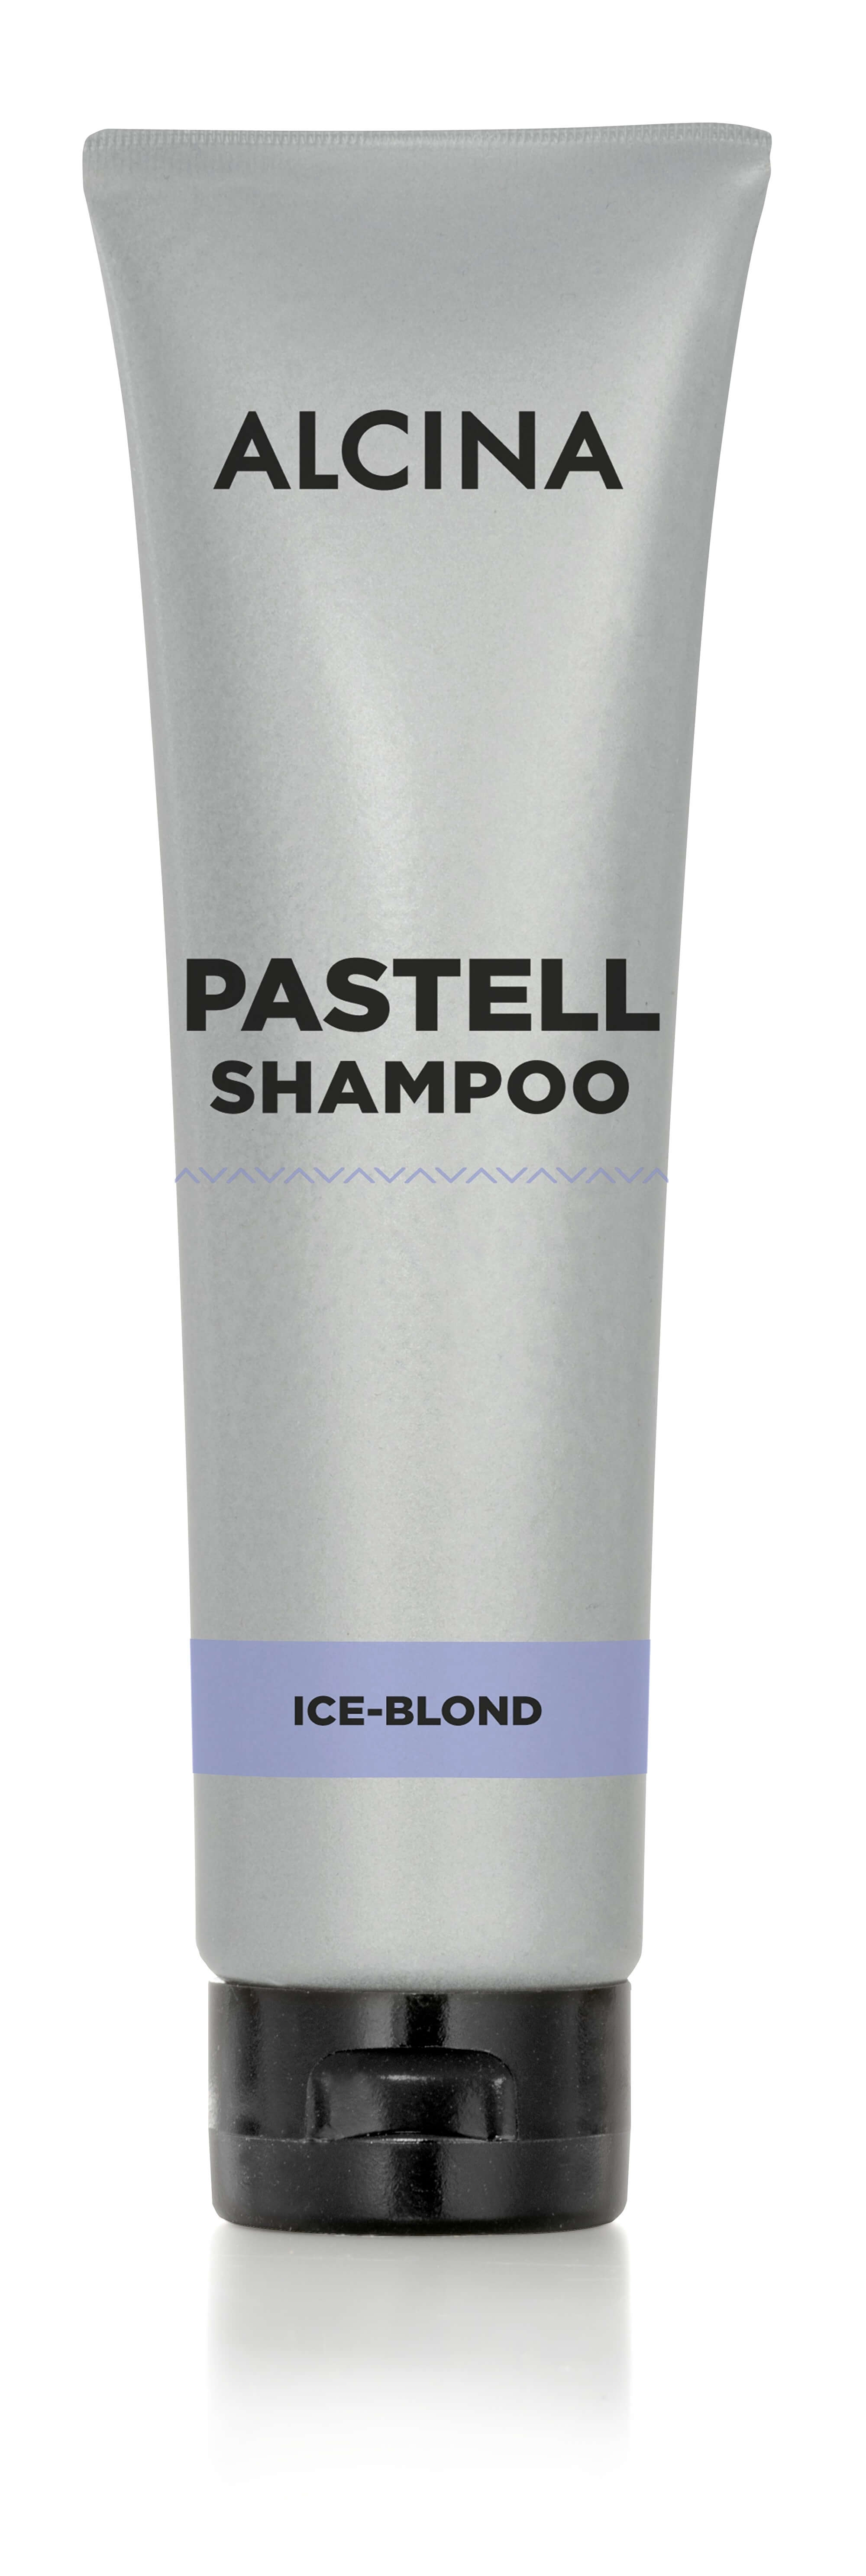 Alcina Šampon pro blond vlasy Ice Blond (Pastell Shampoo) 150 ml